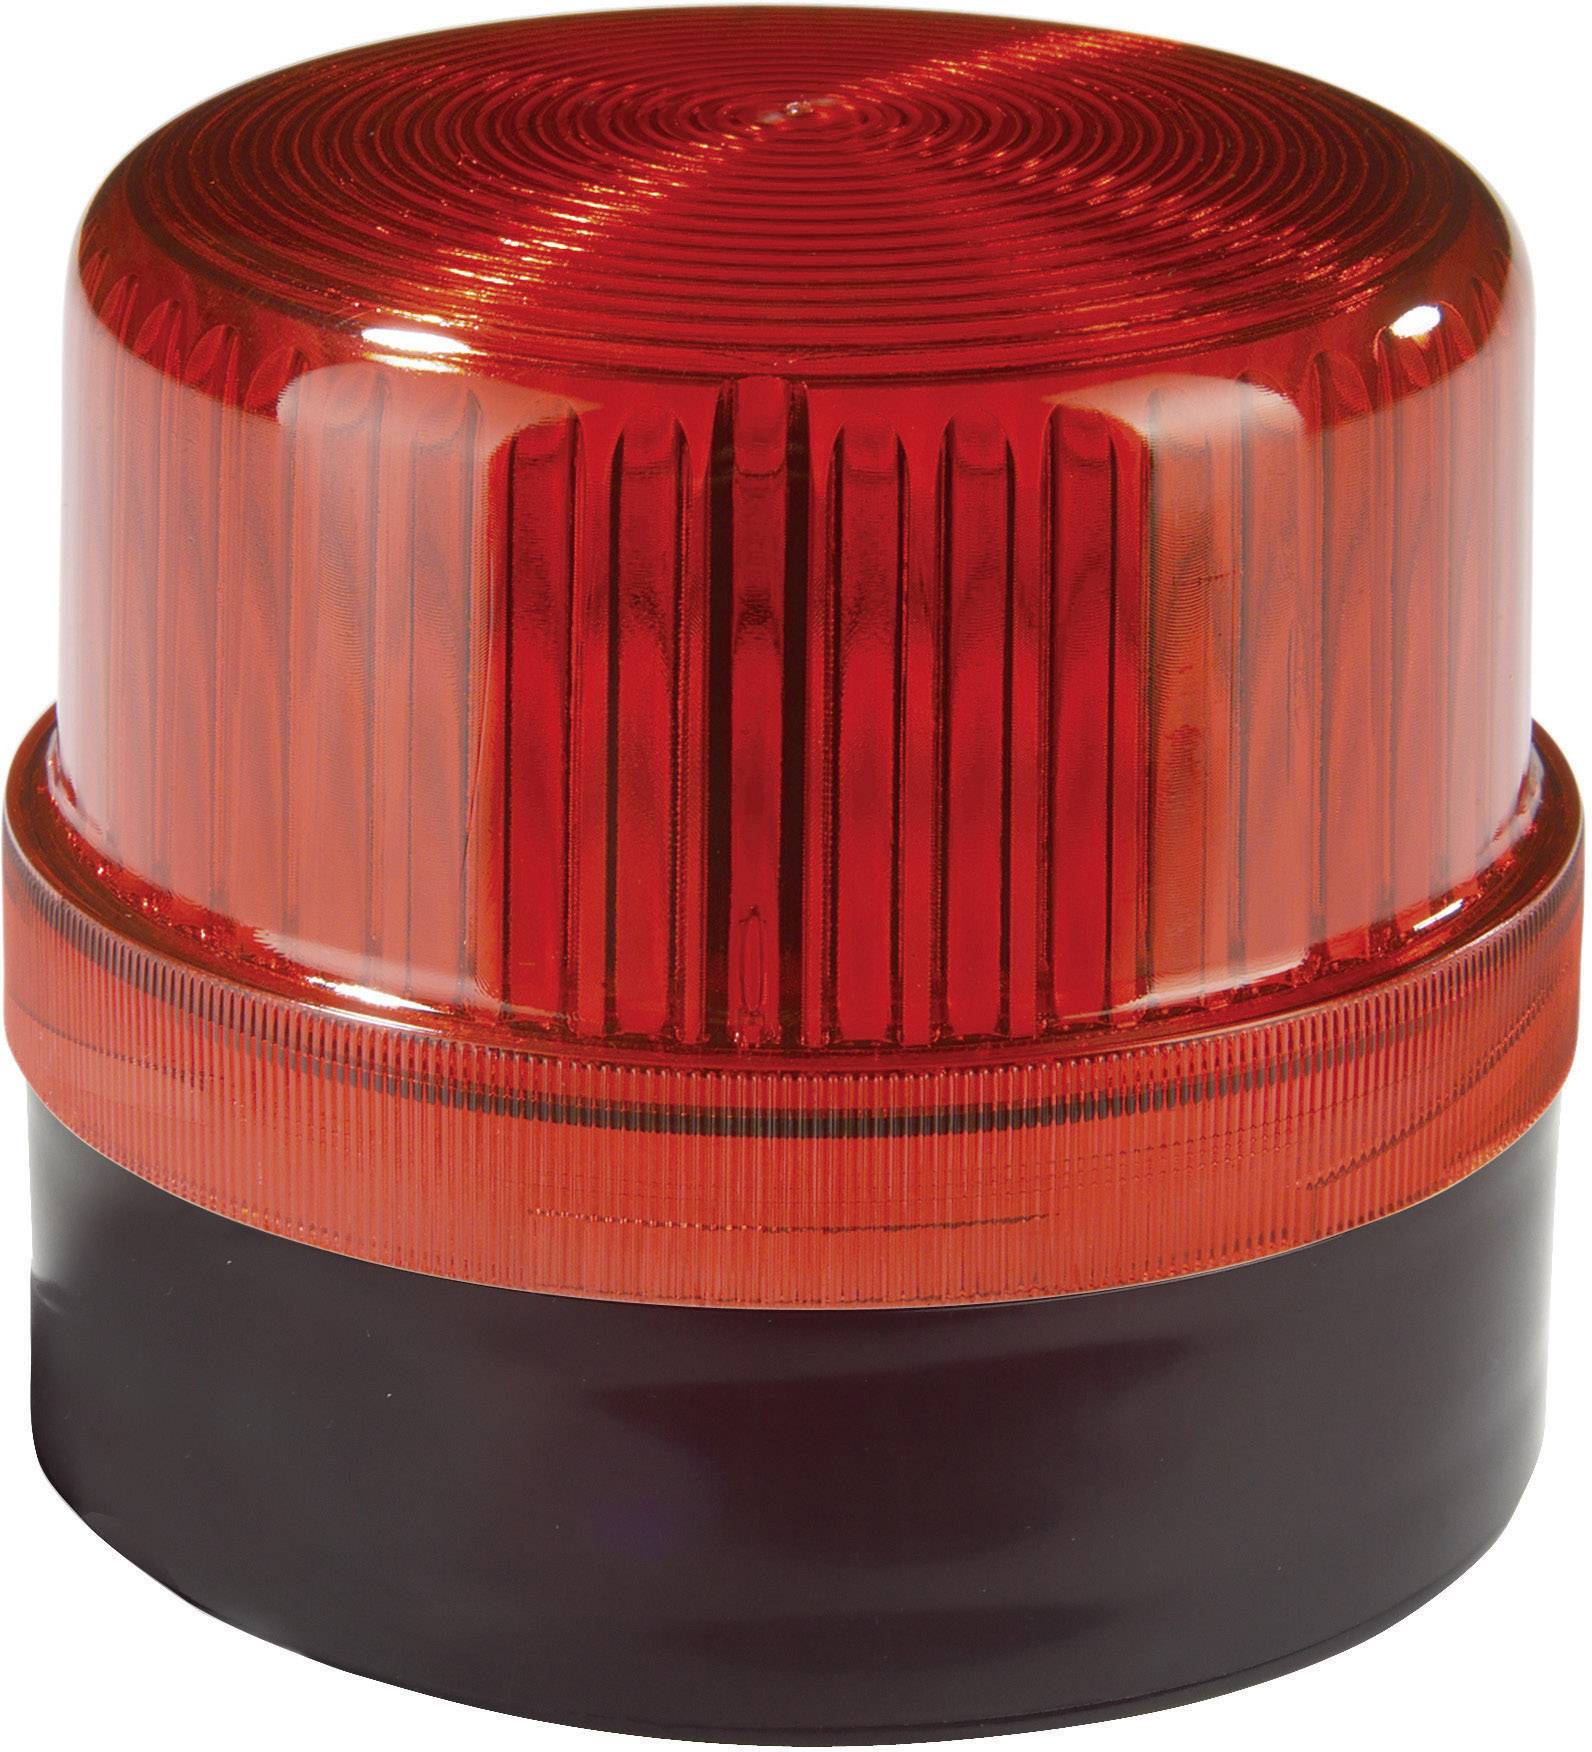 AUER SIGNAL Signalleuchte LED Auer Signalgeräte DLG Rot Rot Dauerlicht 230 V/AC